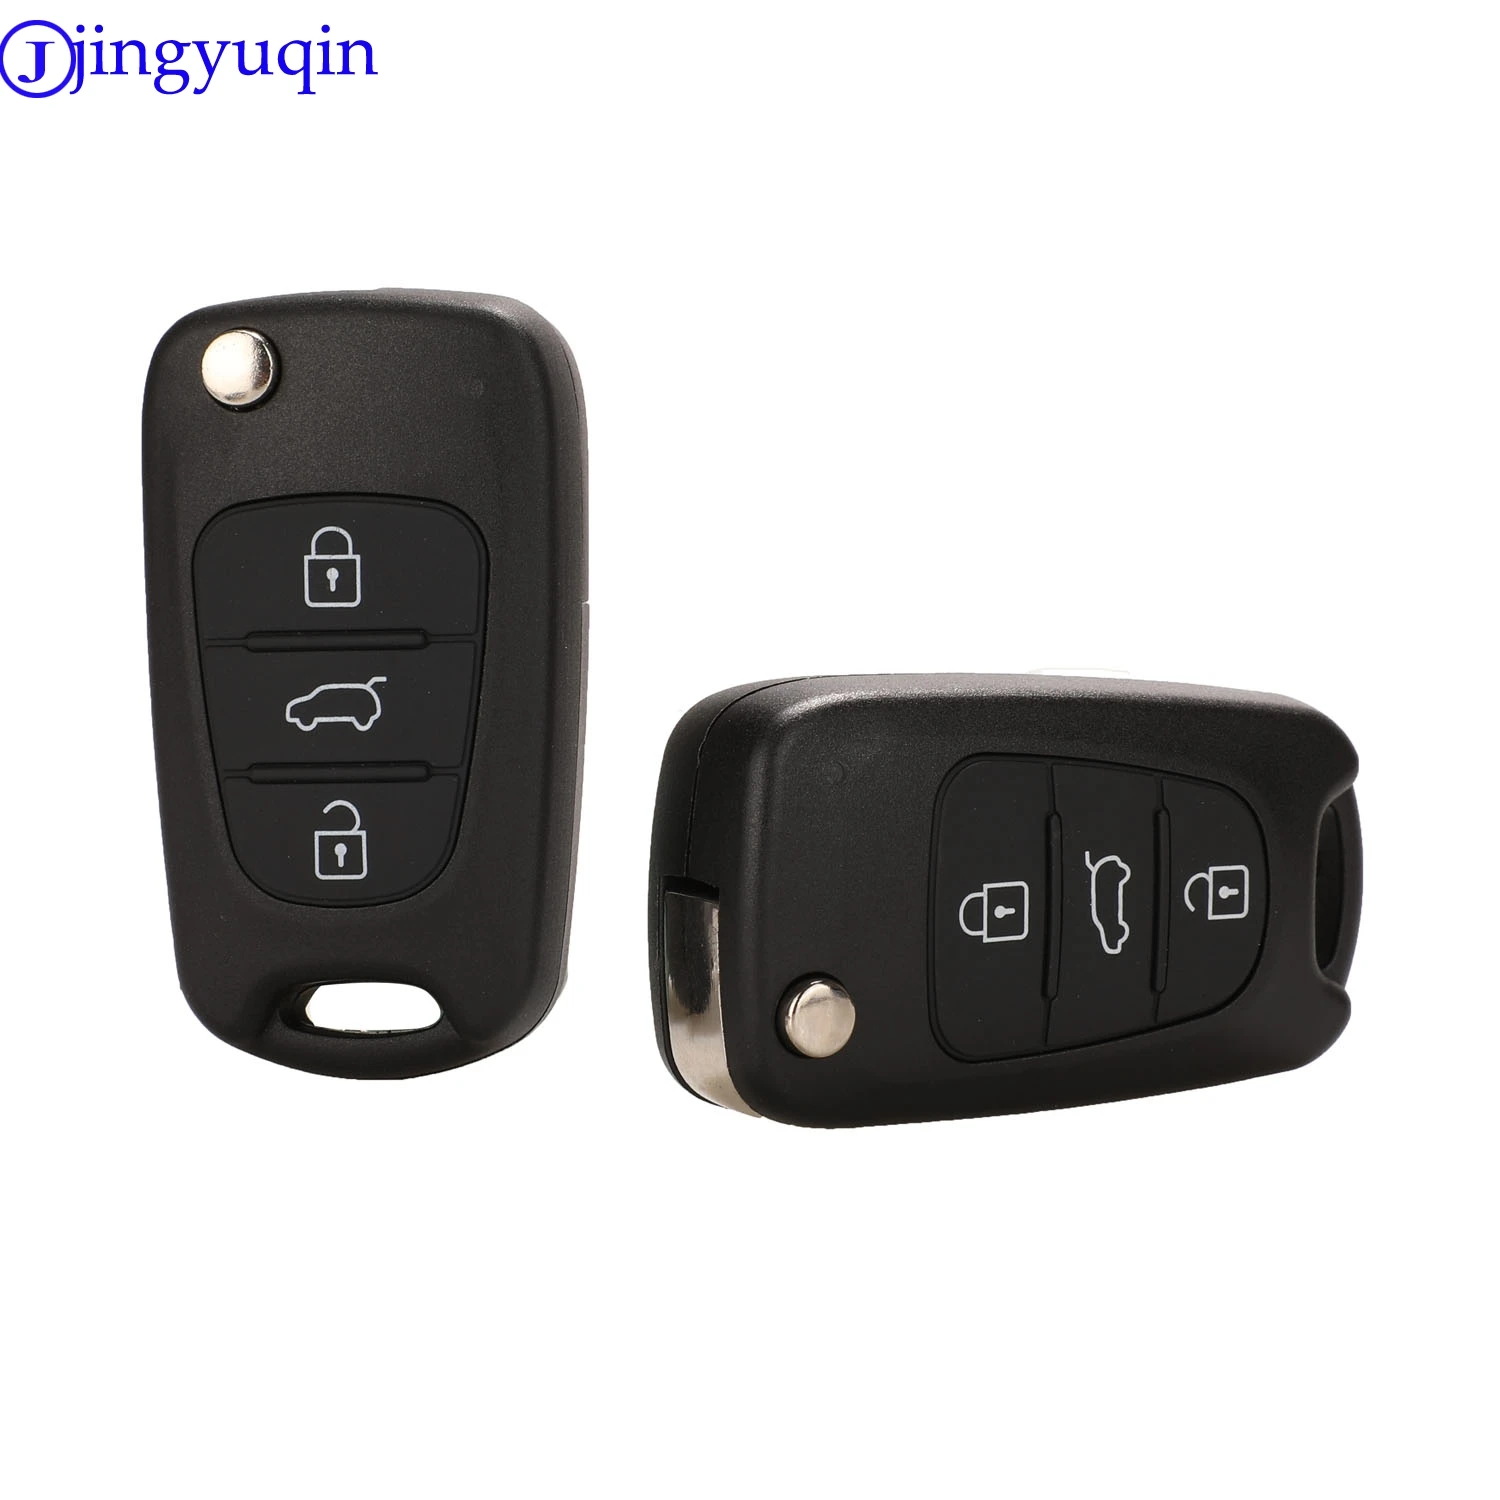 Jingyuqin Uncut Blade 3 кнопки откидная оболочка ключа дистанционного управления для HYUNDAI I30 IX35 для Kia K2 K5 ключи автомобиля пустой чехол